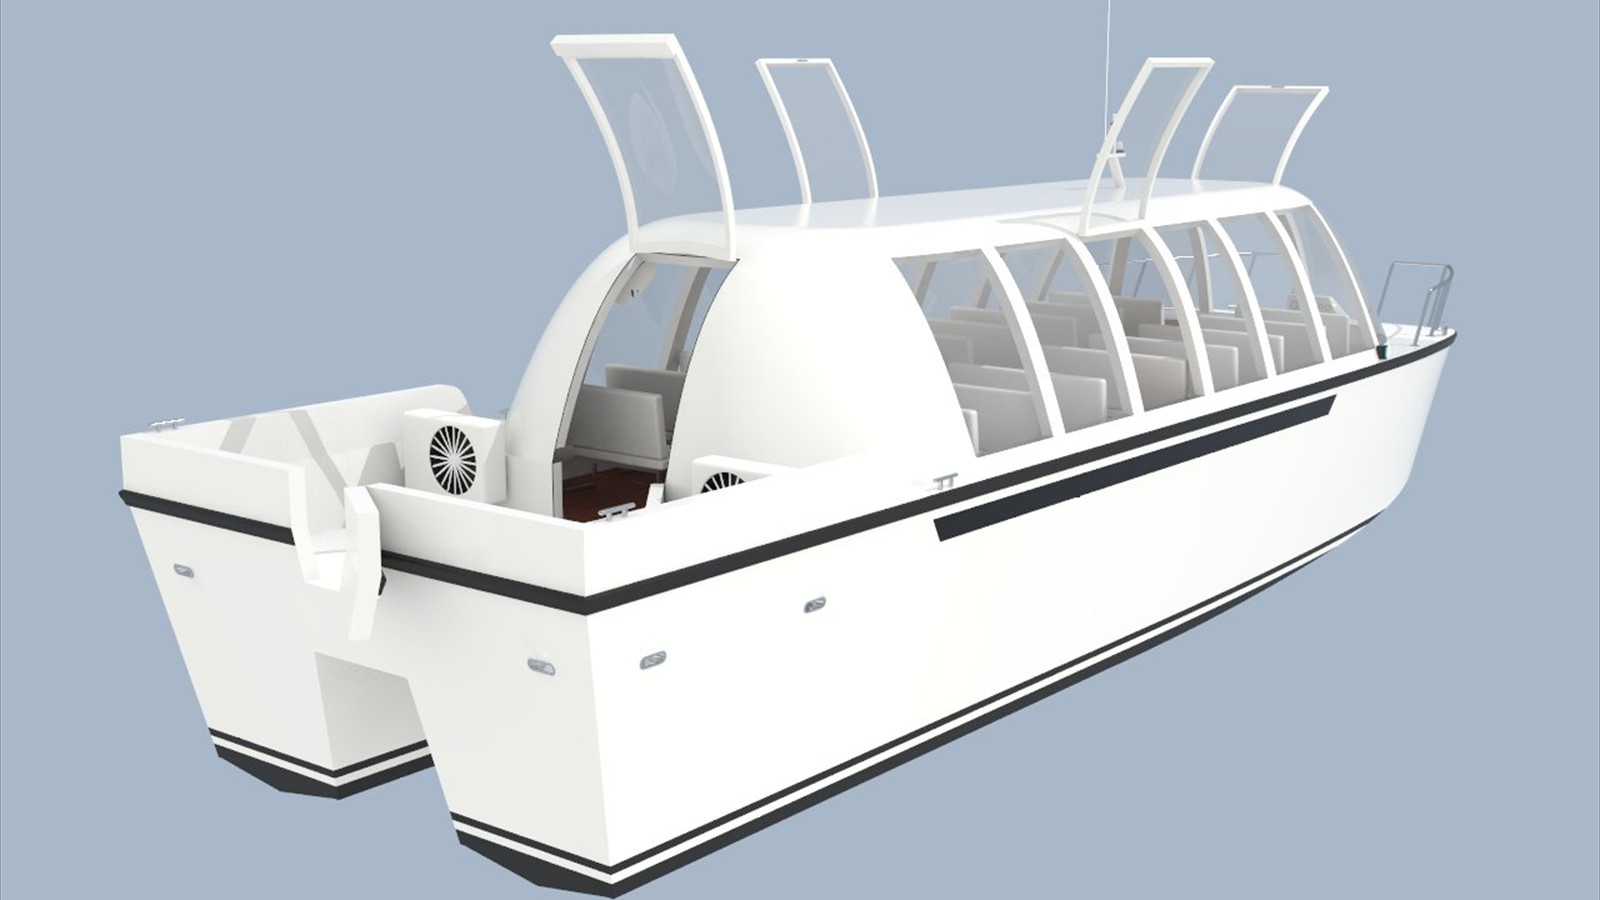 enclosed_cabin_catamaran_watertaxi_4